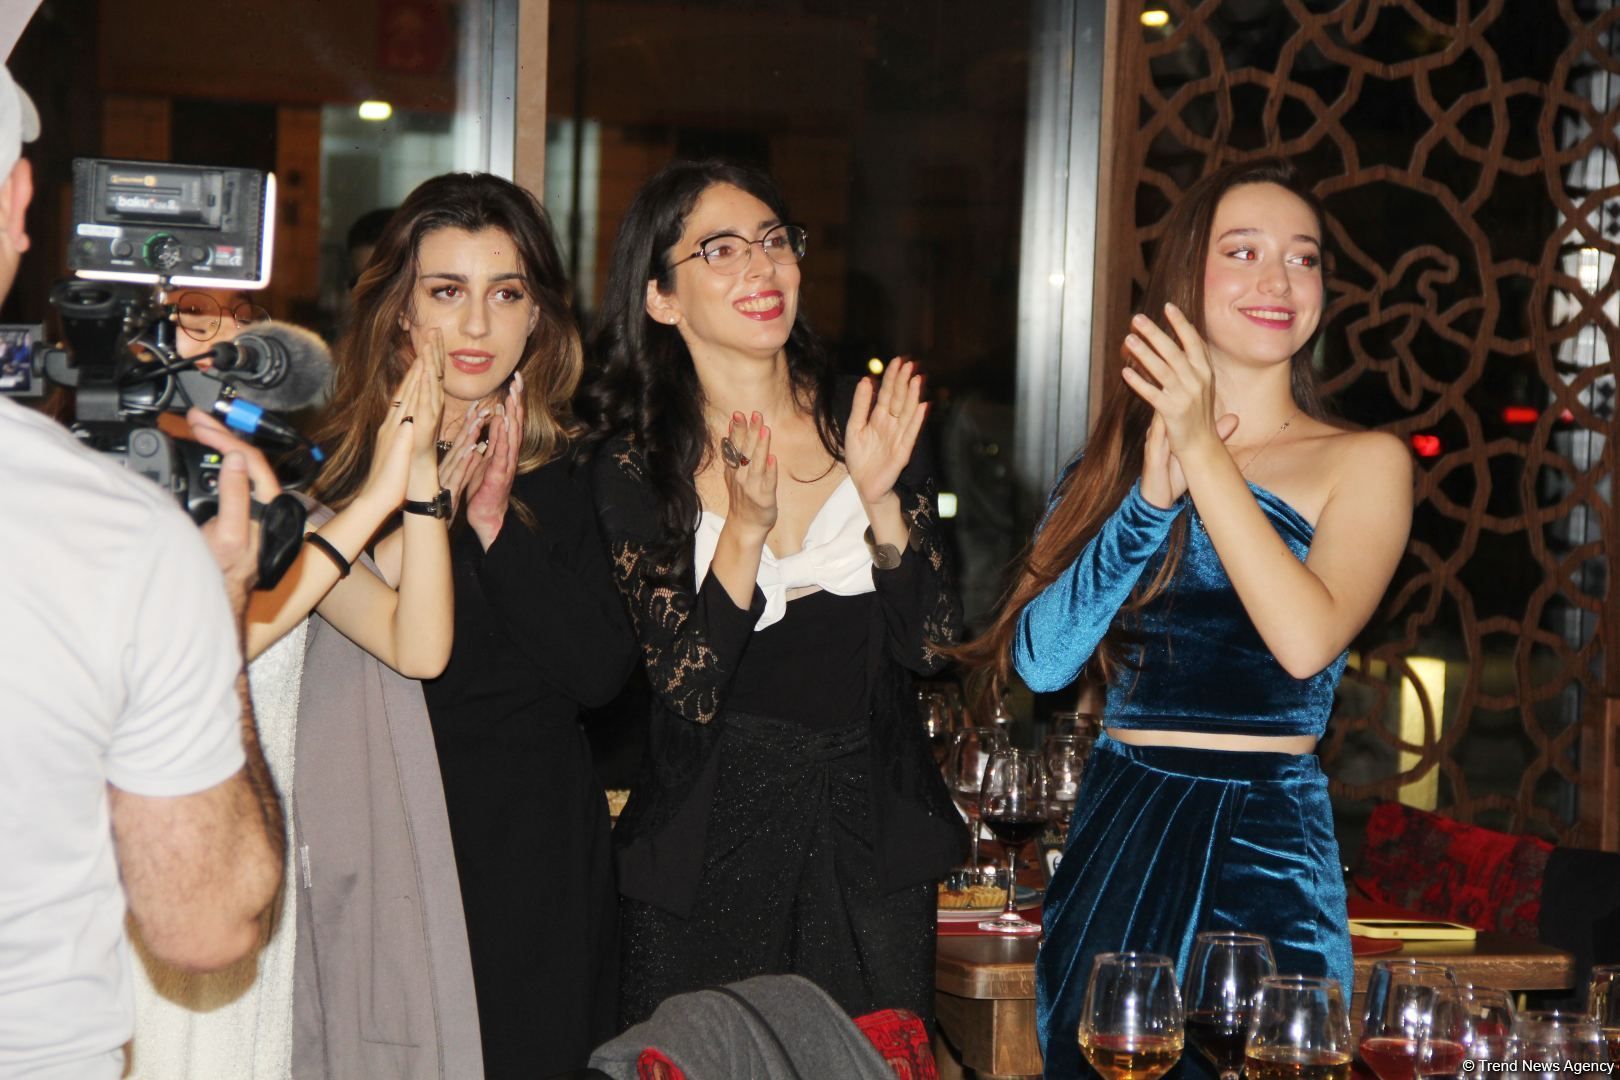 After-party held for Baku Talent Show participants [PHOTOS]